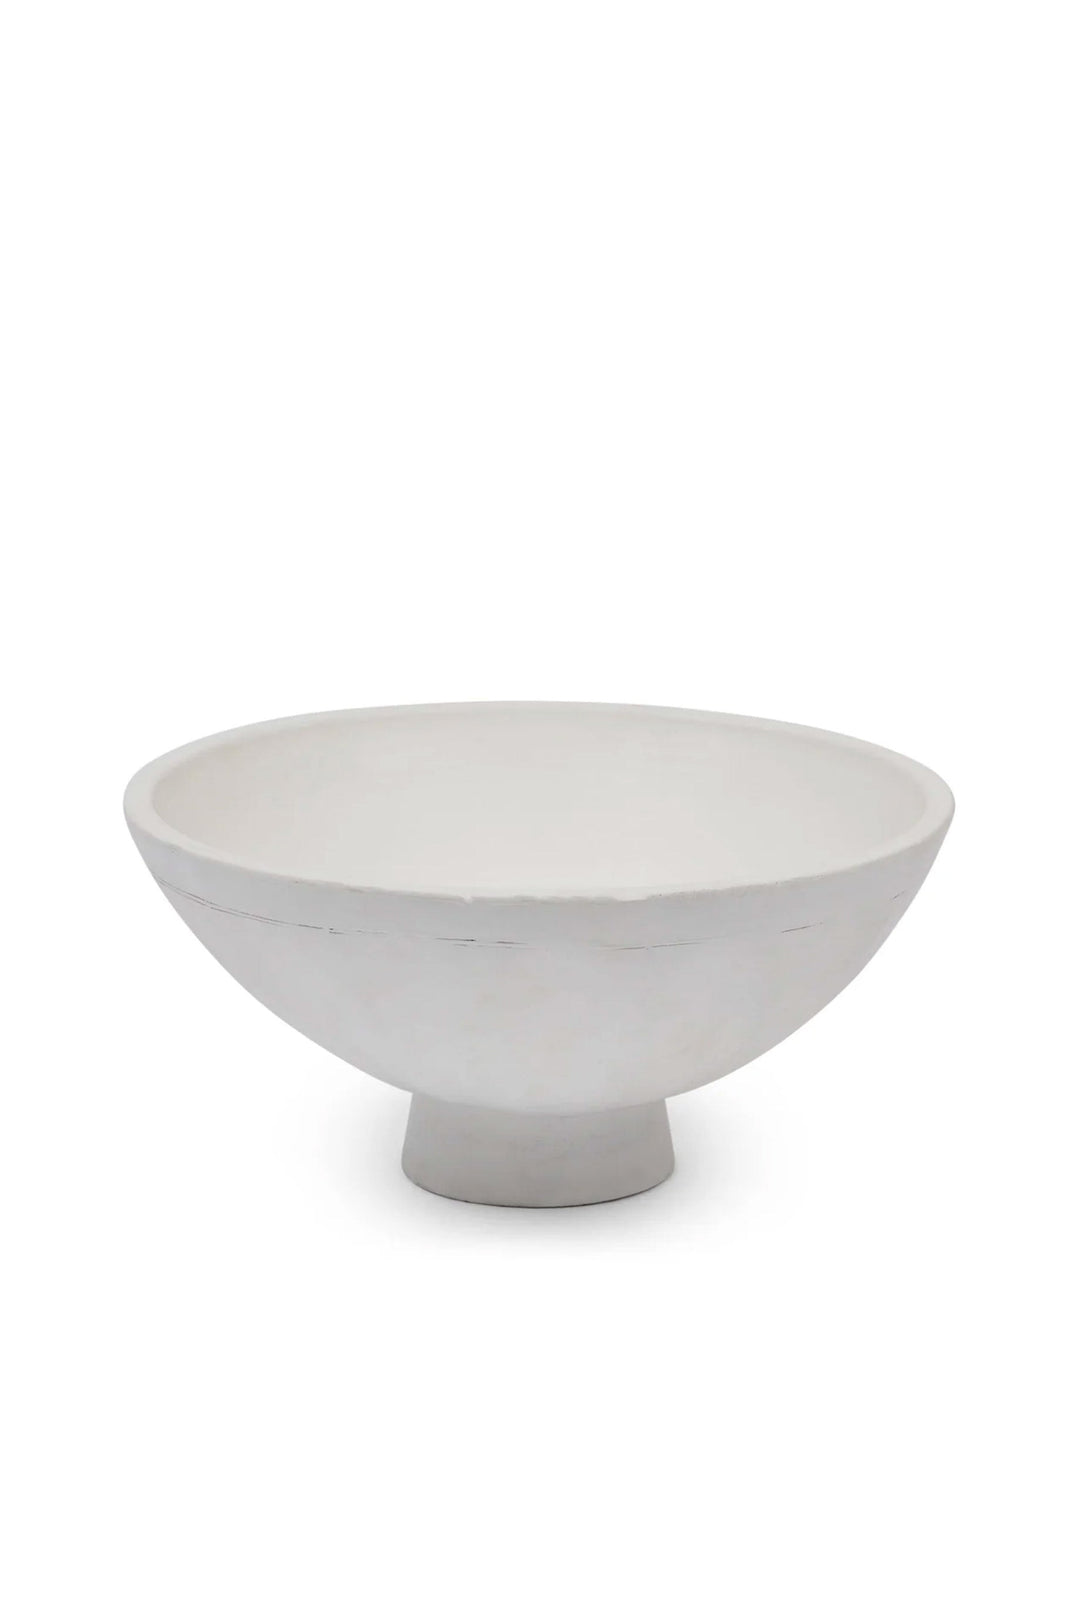 Husk Astri Bowl - White